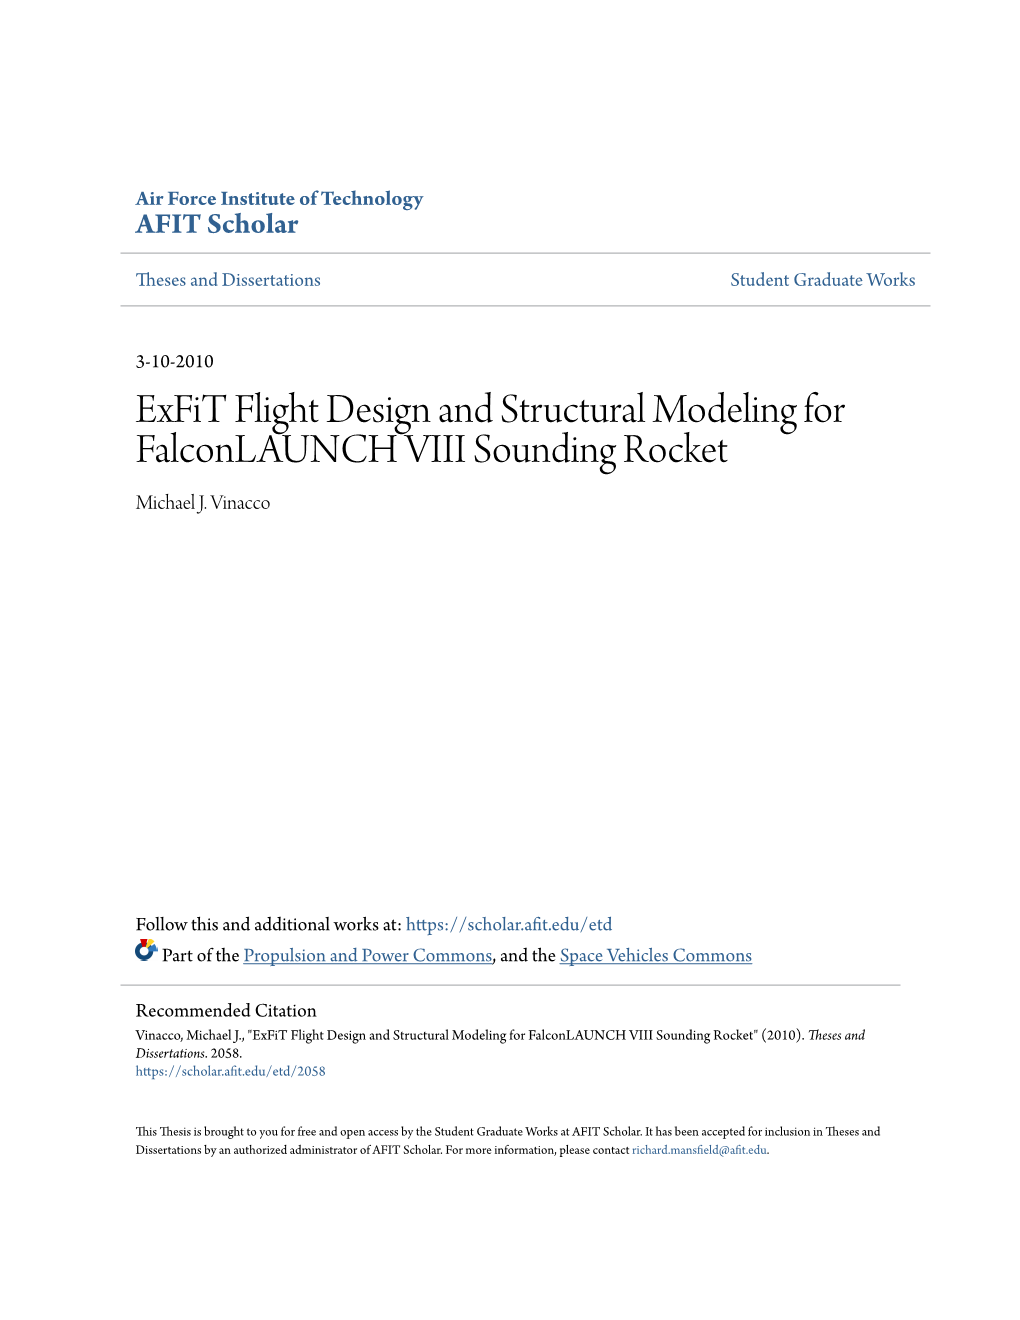 Exfit Flight Design and Structural Modeling for Falconlaunch VIII Sounding Rocket Michael J